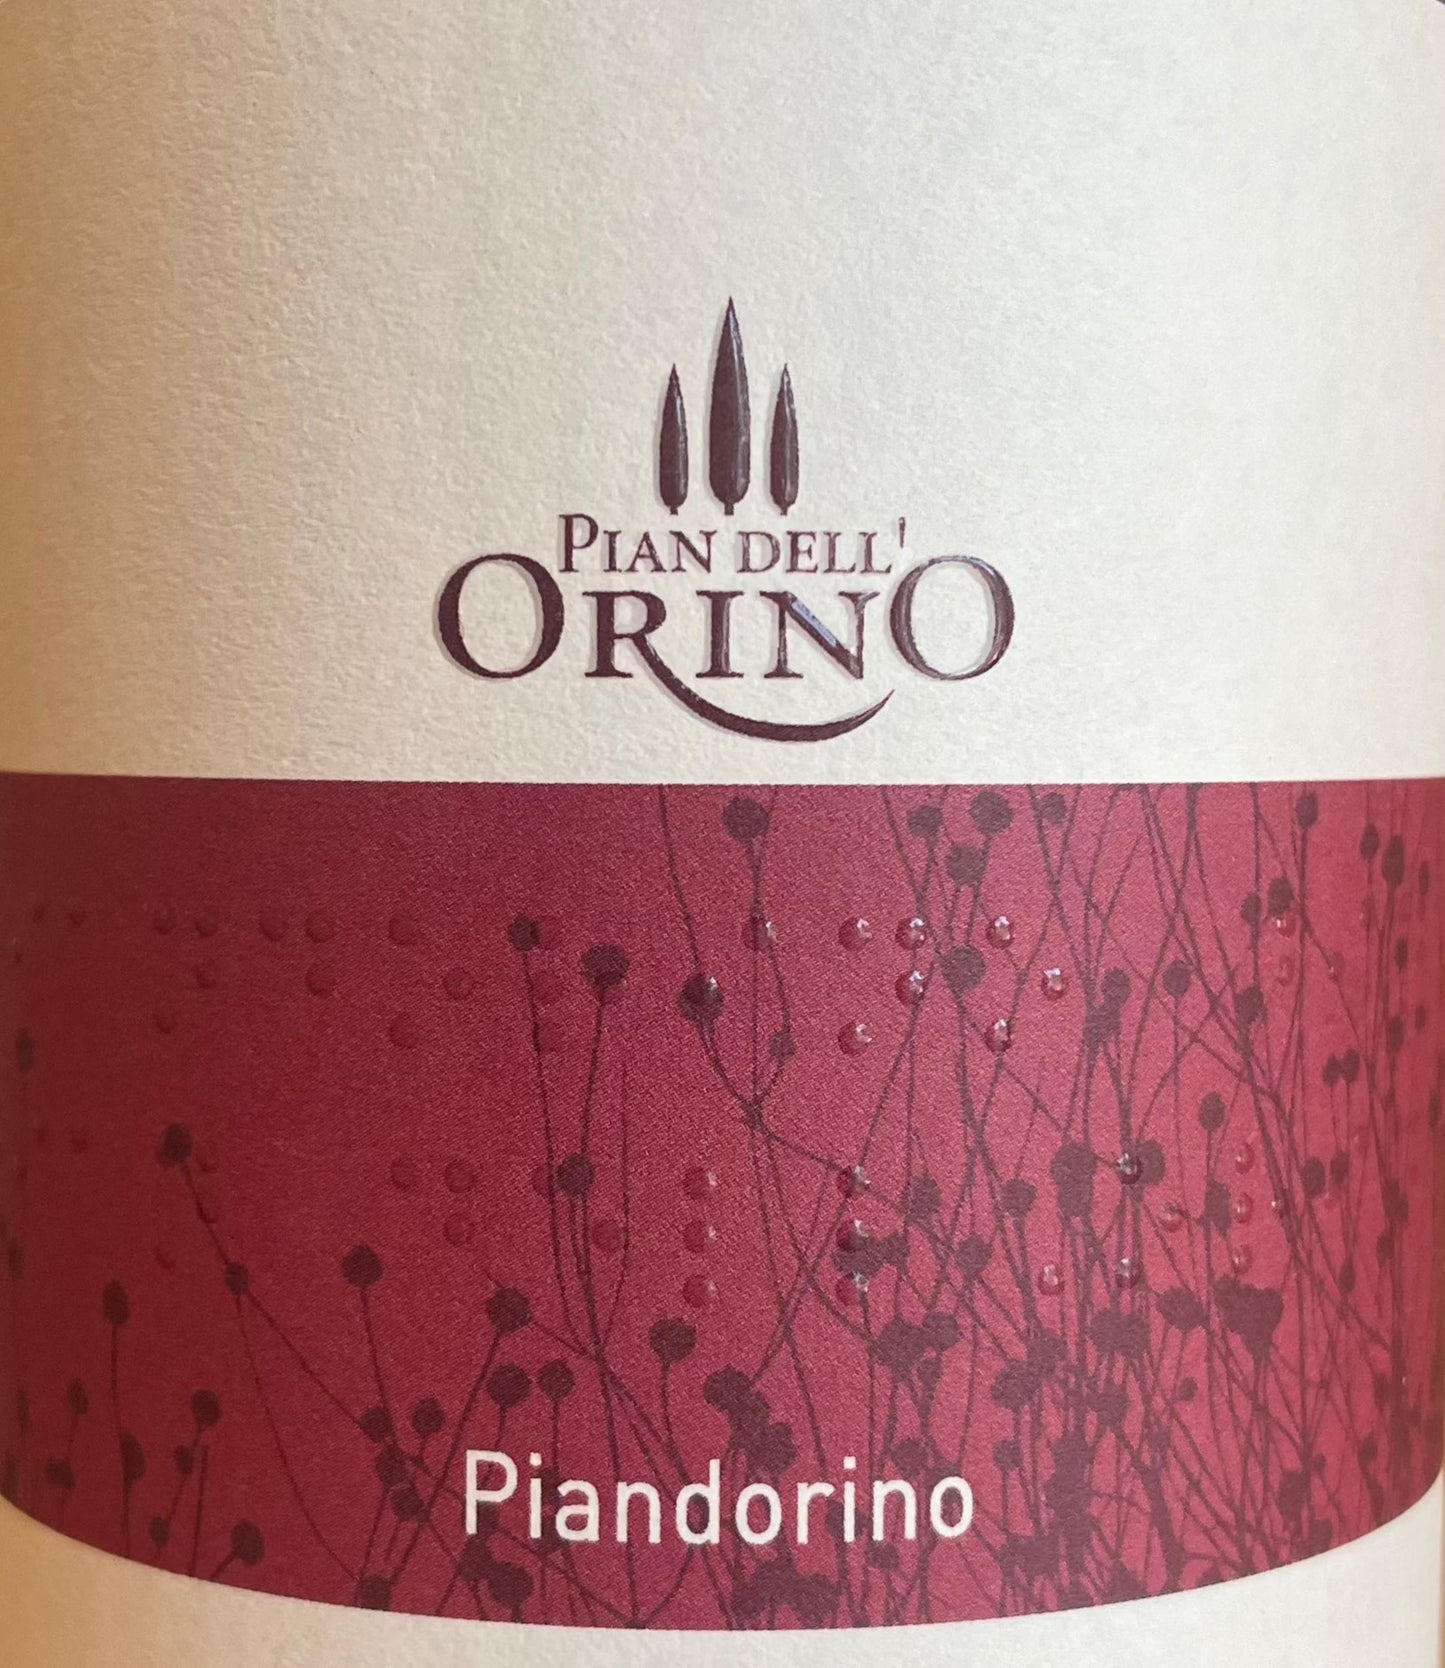 Pian dell'Orino 'Piandorino' - Toscana IGT